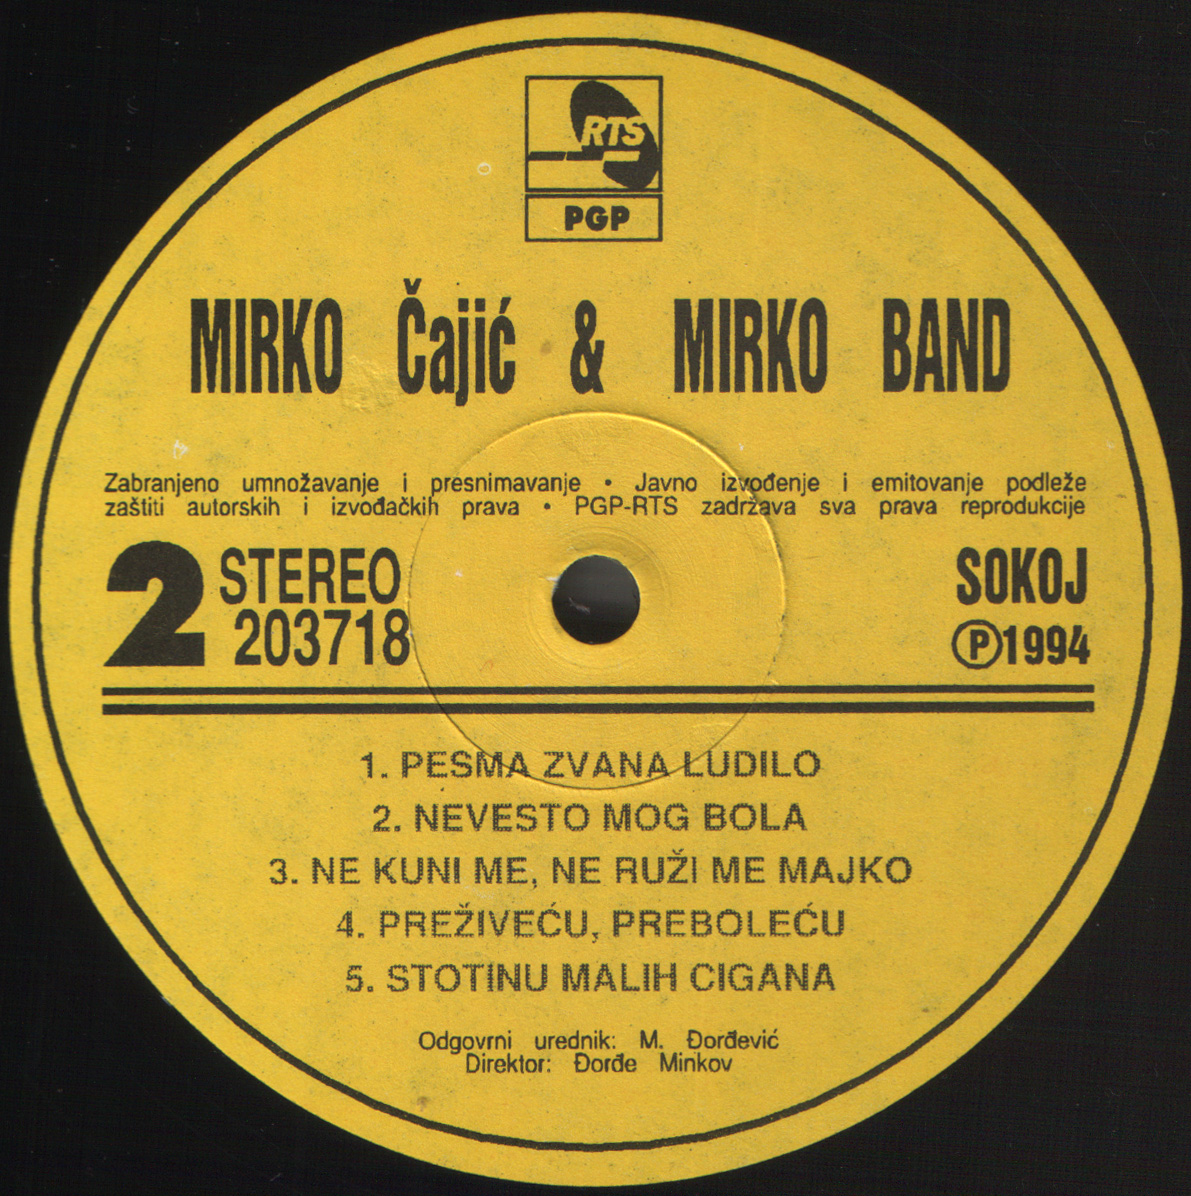 Mirko Cajic 1994 B